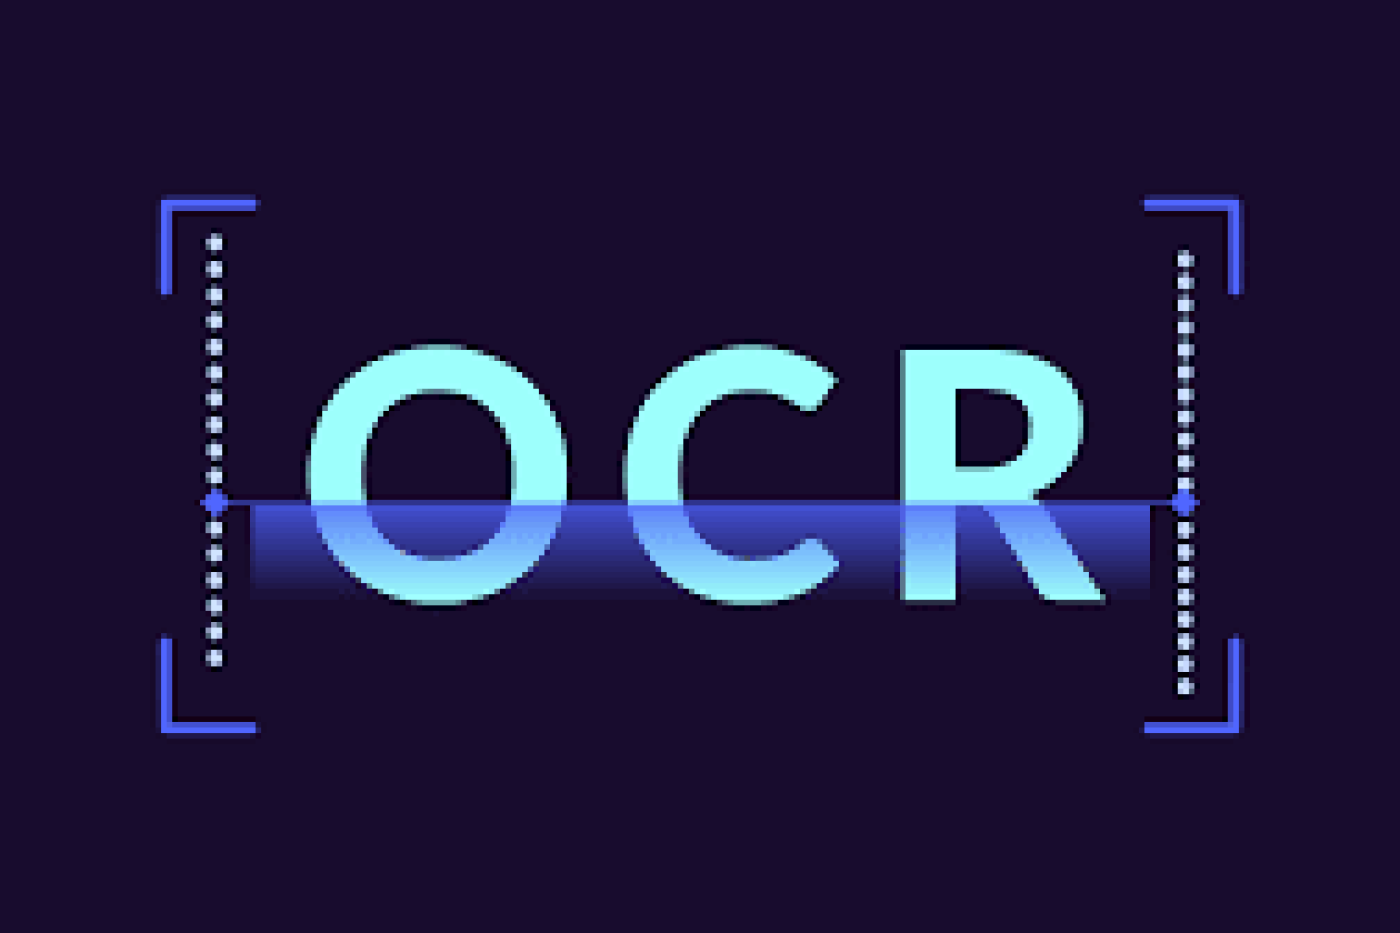 OCR Software